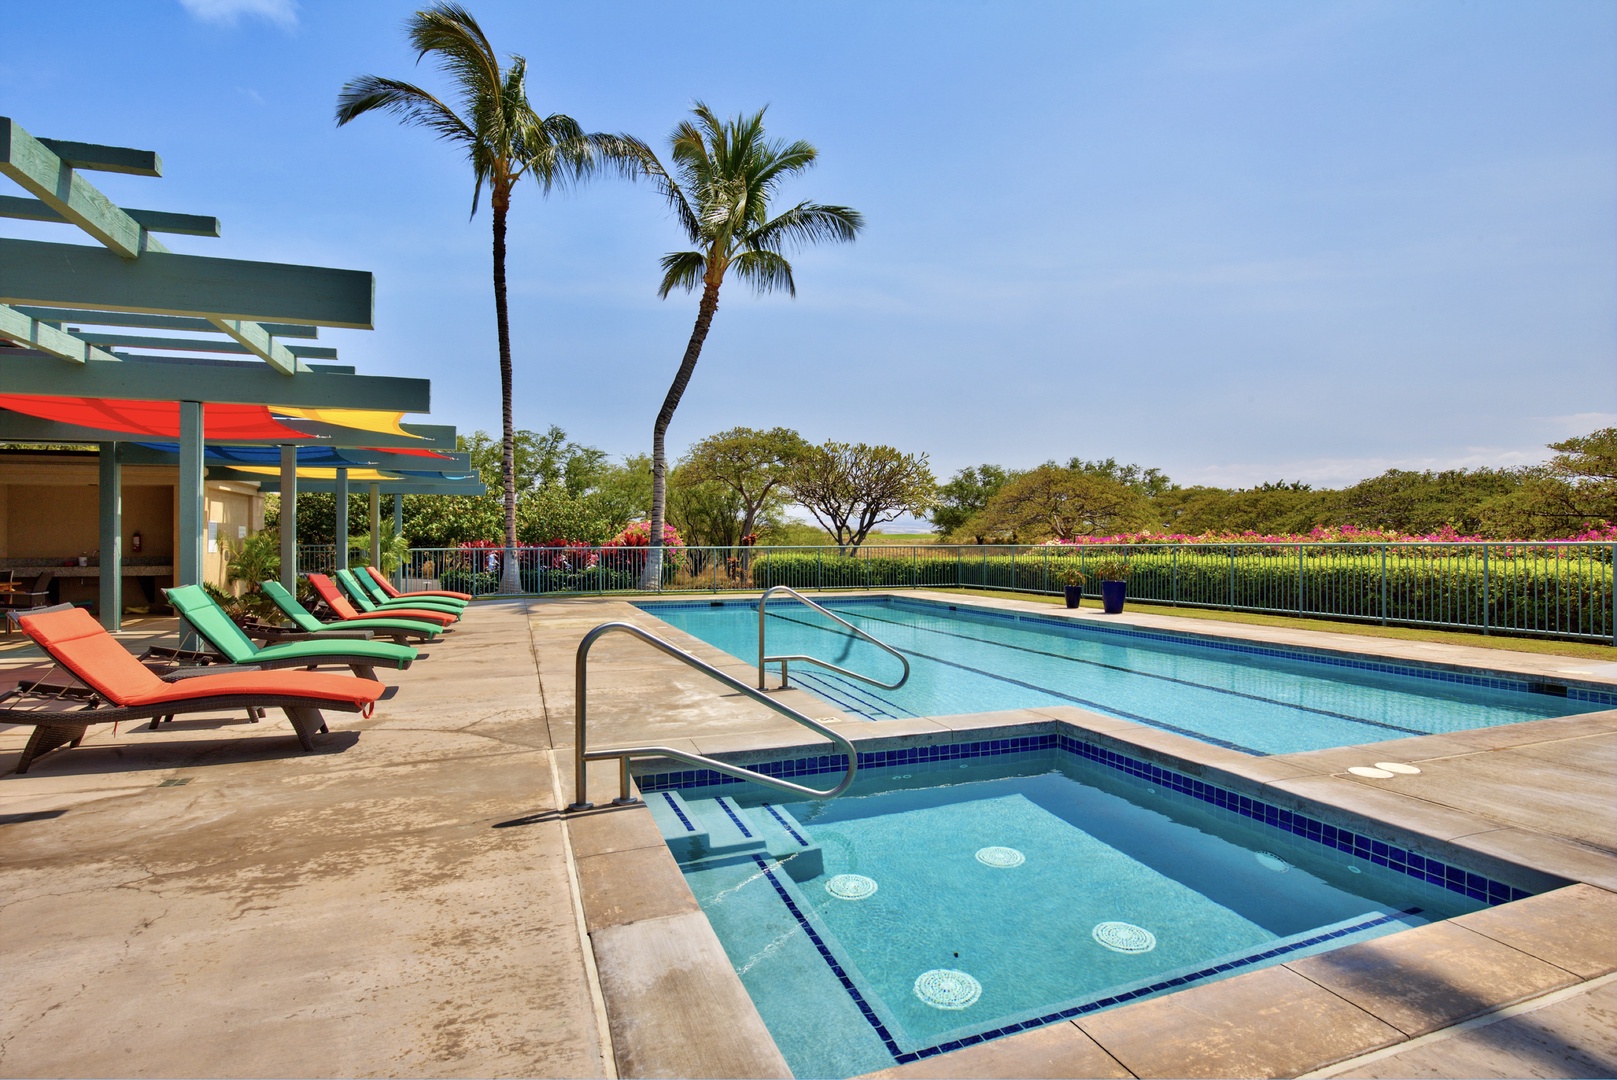 Kamuela Vacation Rentals, 2BD Kumulani (I-4) at Mauna Kea Resort - Kumulani amenities center lap pool and jacuzzi.